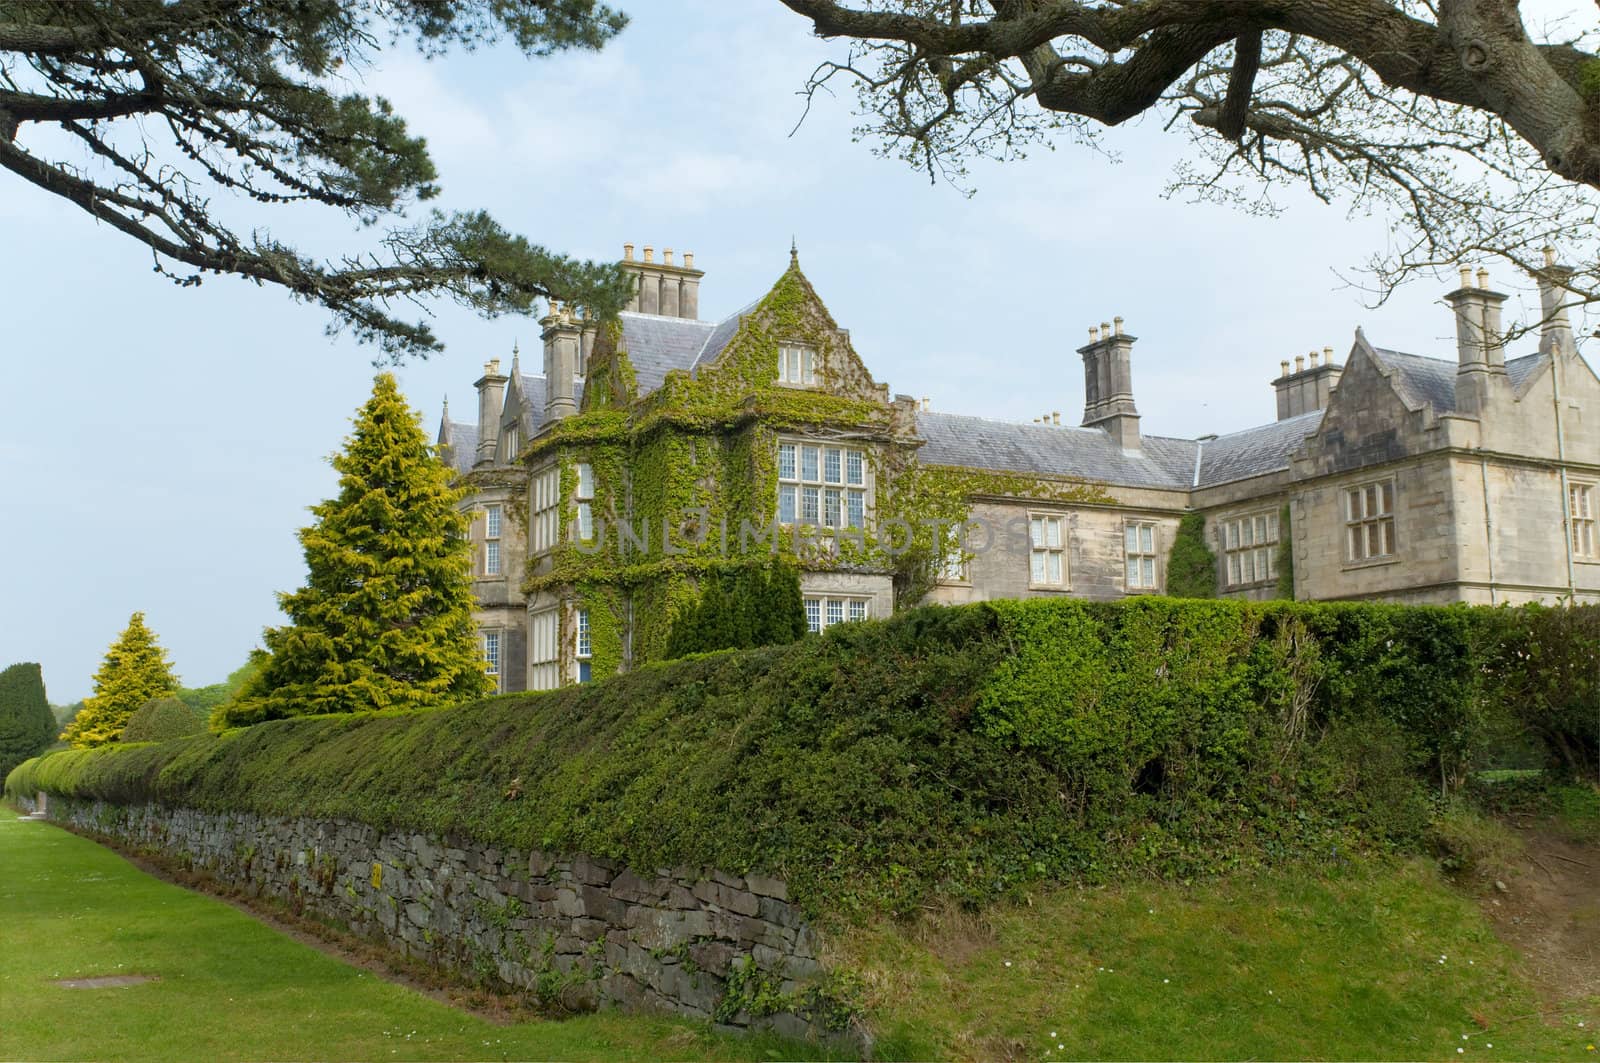 View of Muckross estate, Ireland